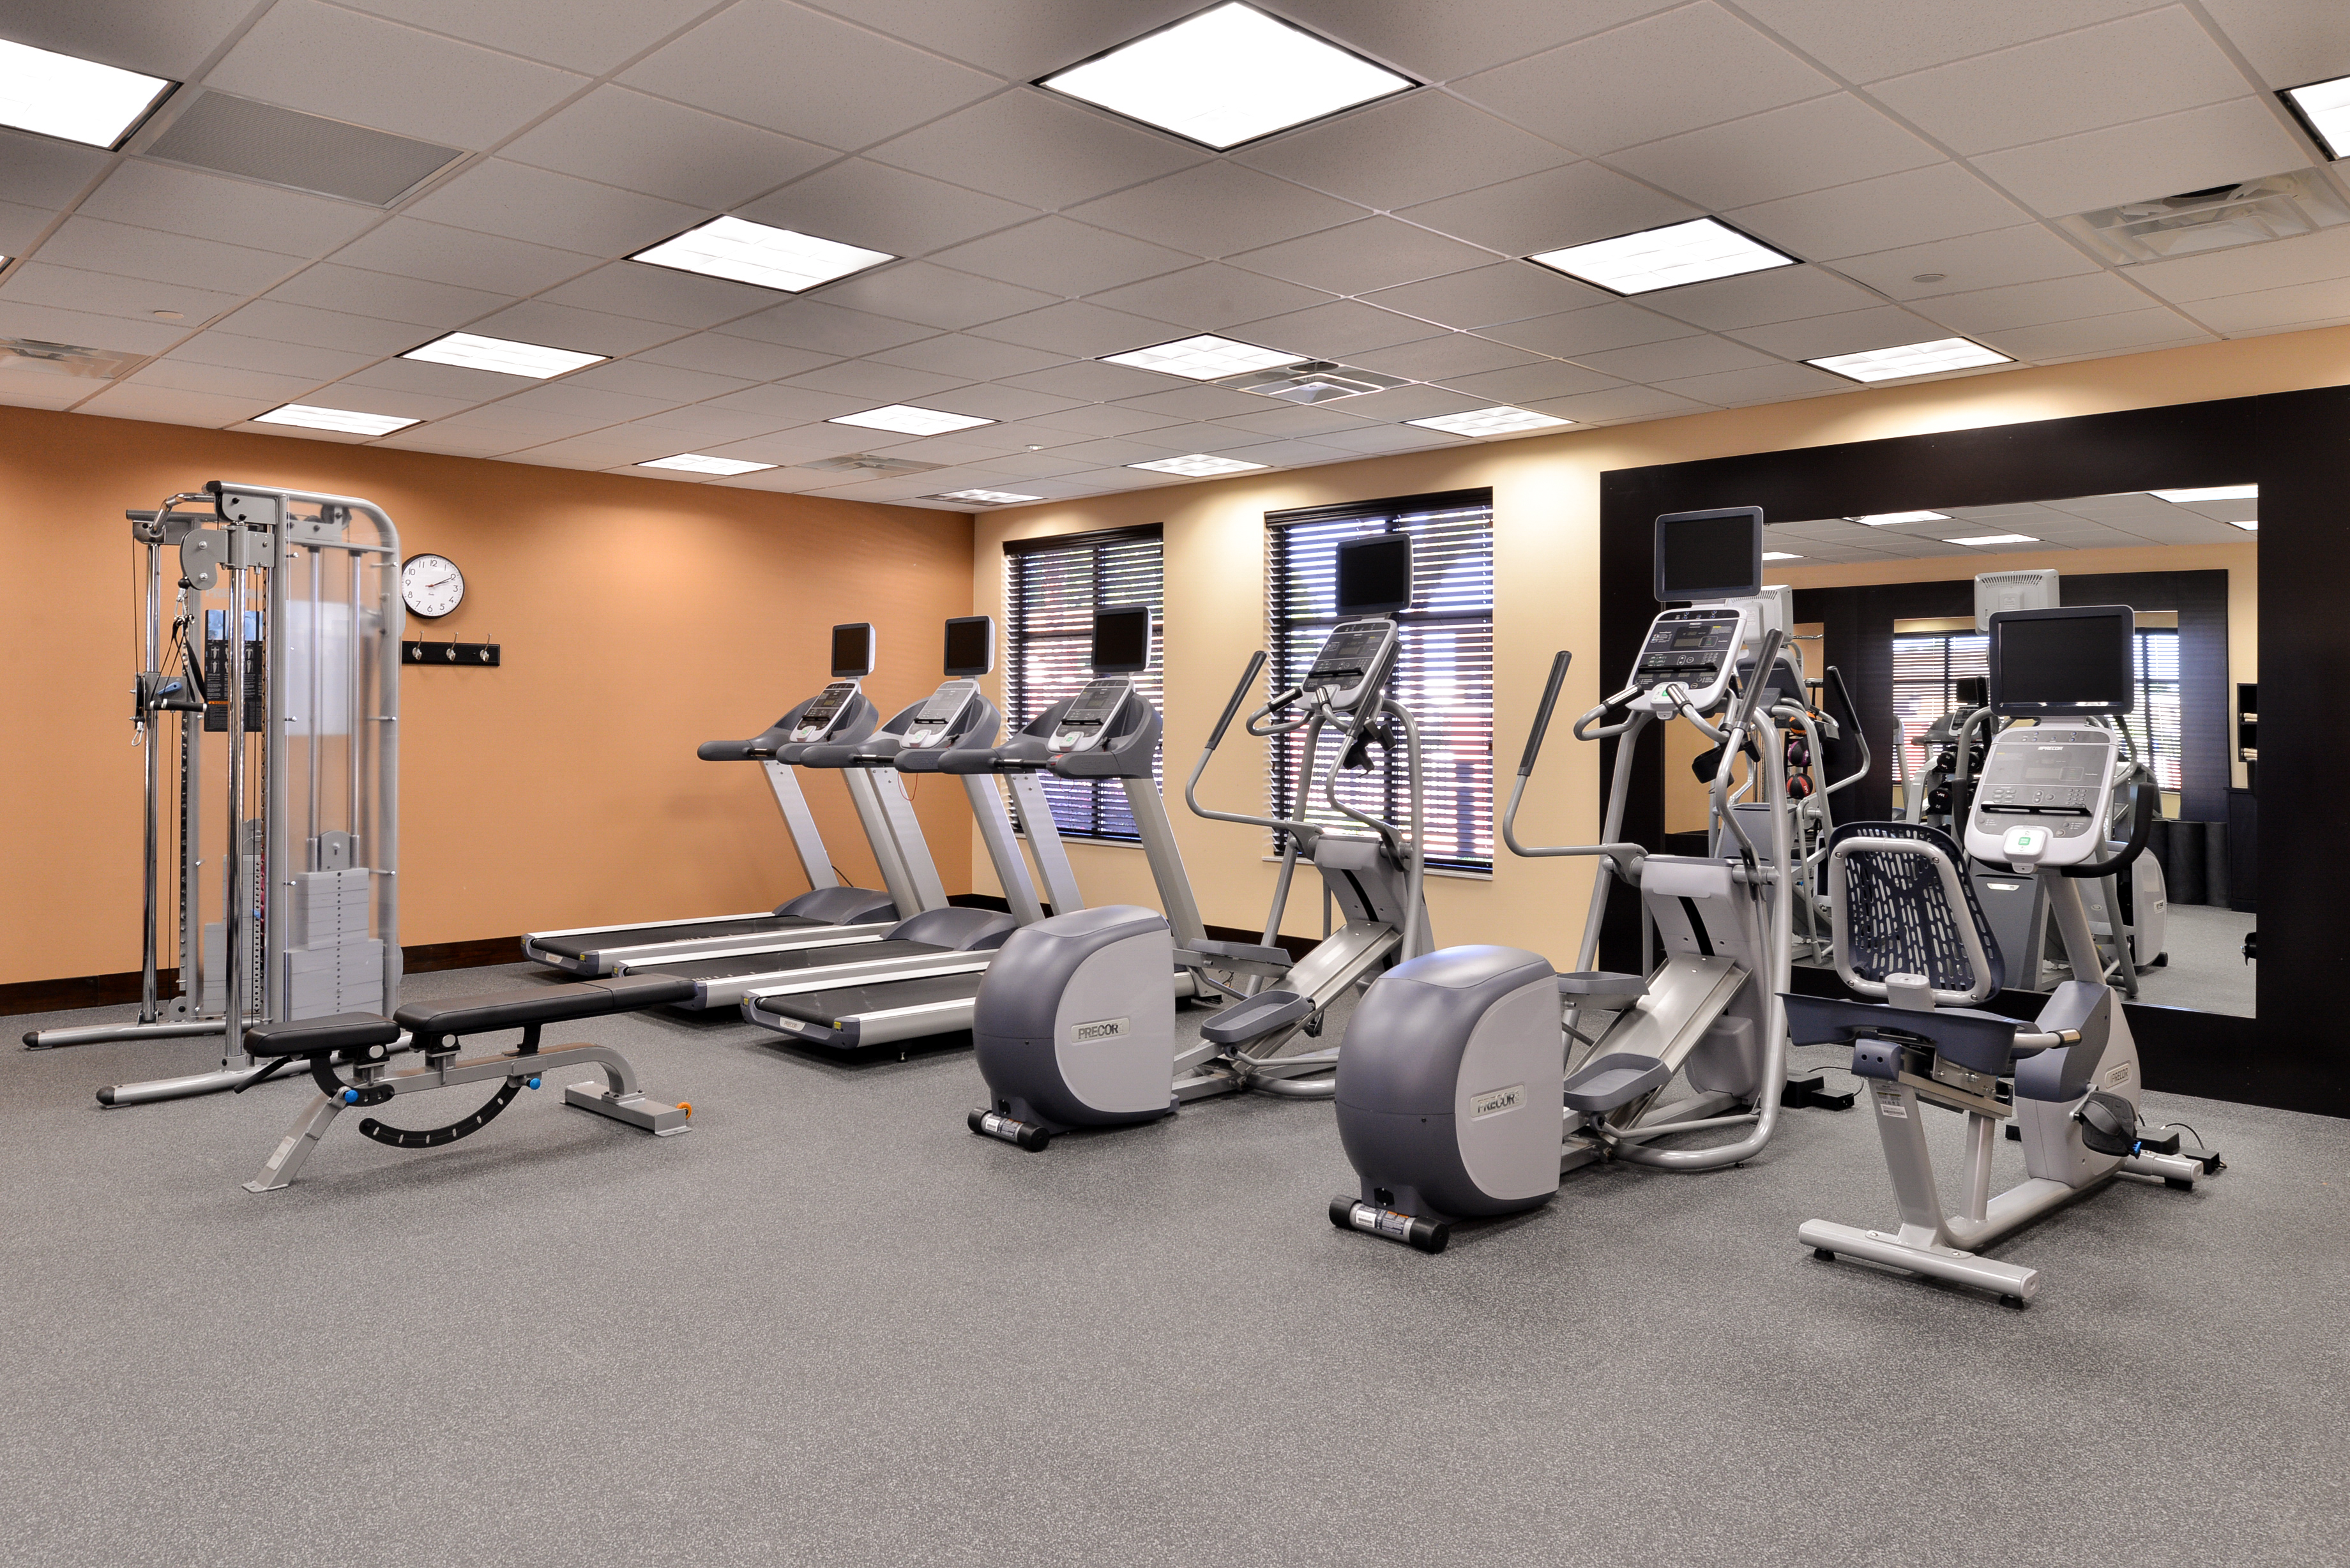 Fitness Center Treadmills and Bikes